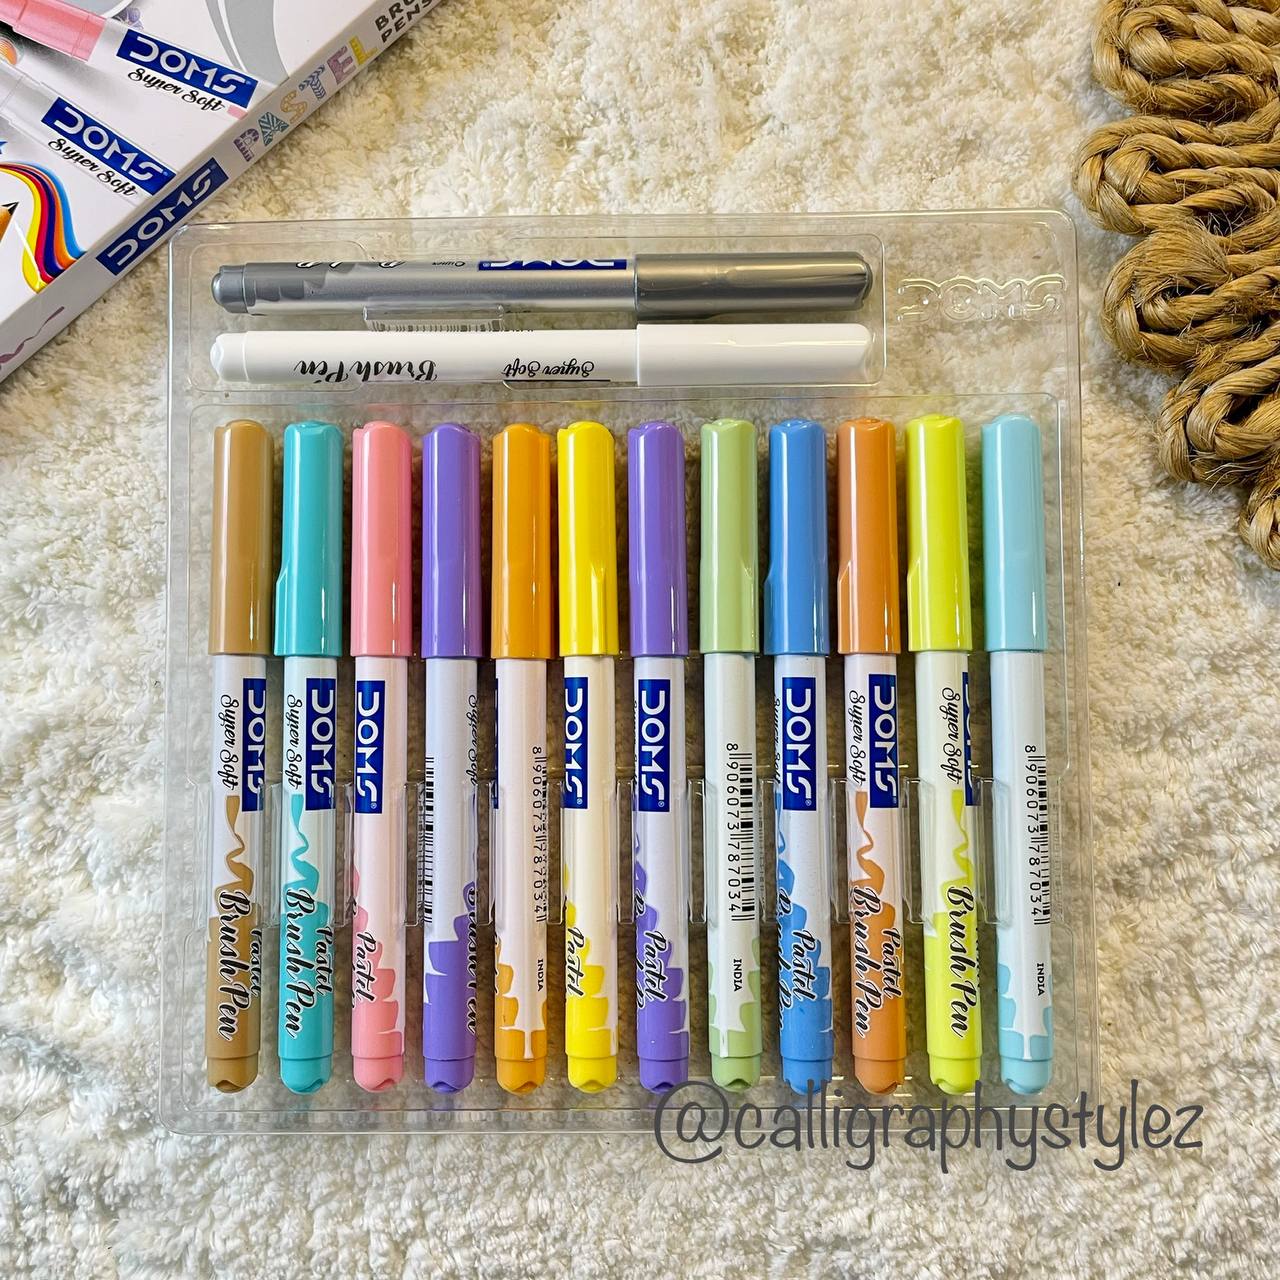 Brush Pen - Pastel, DOMS, 14 Shades